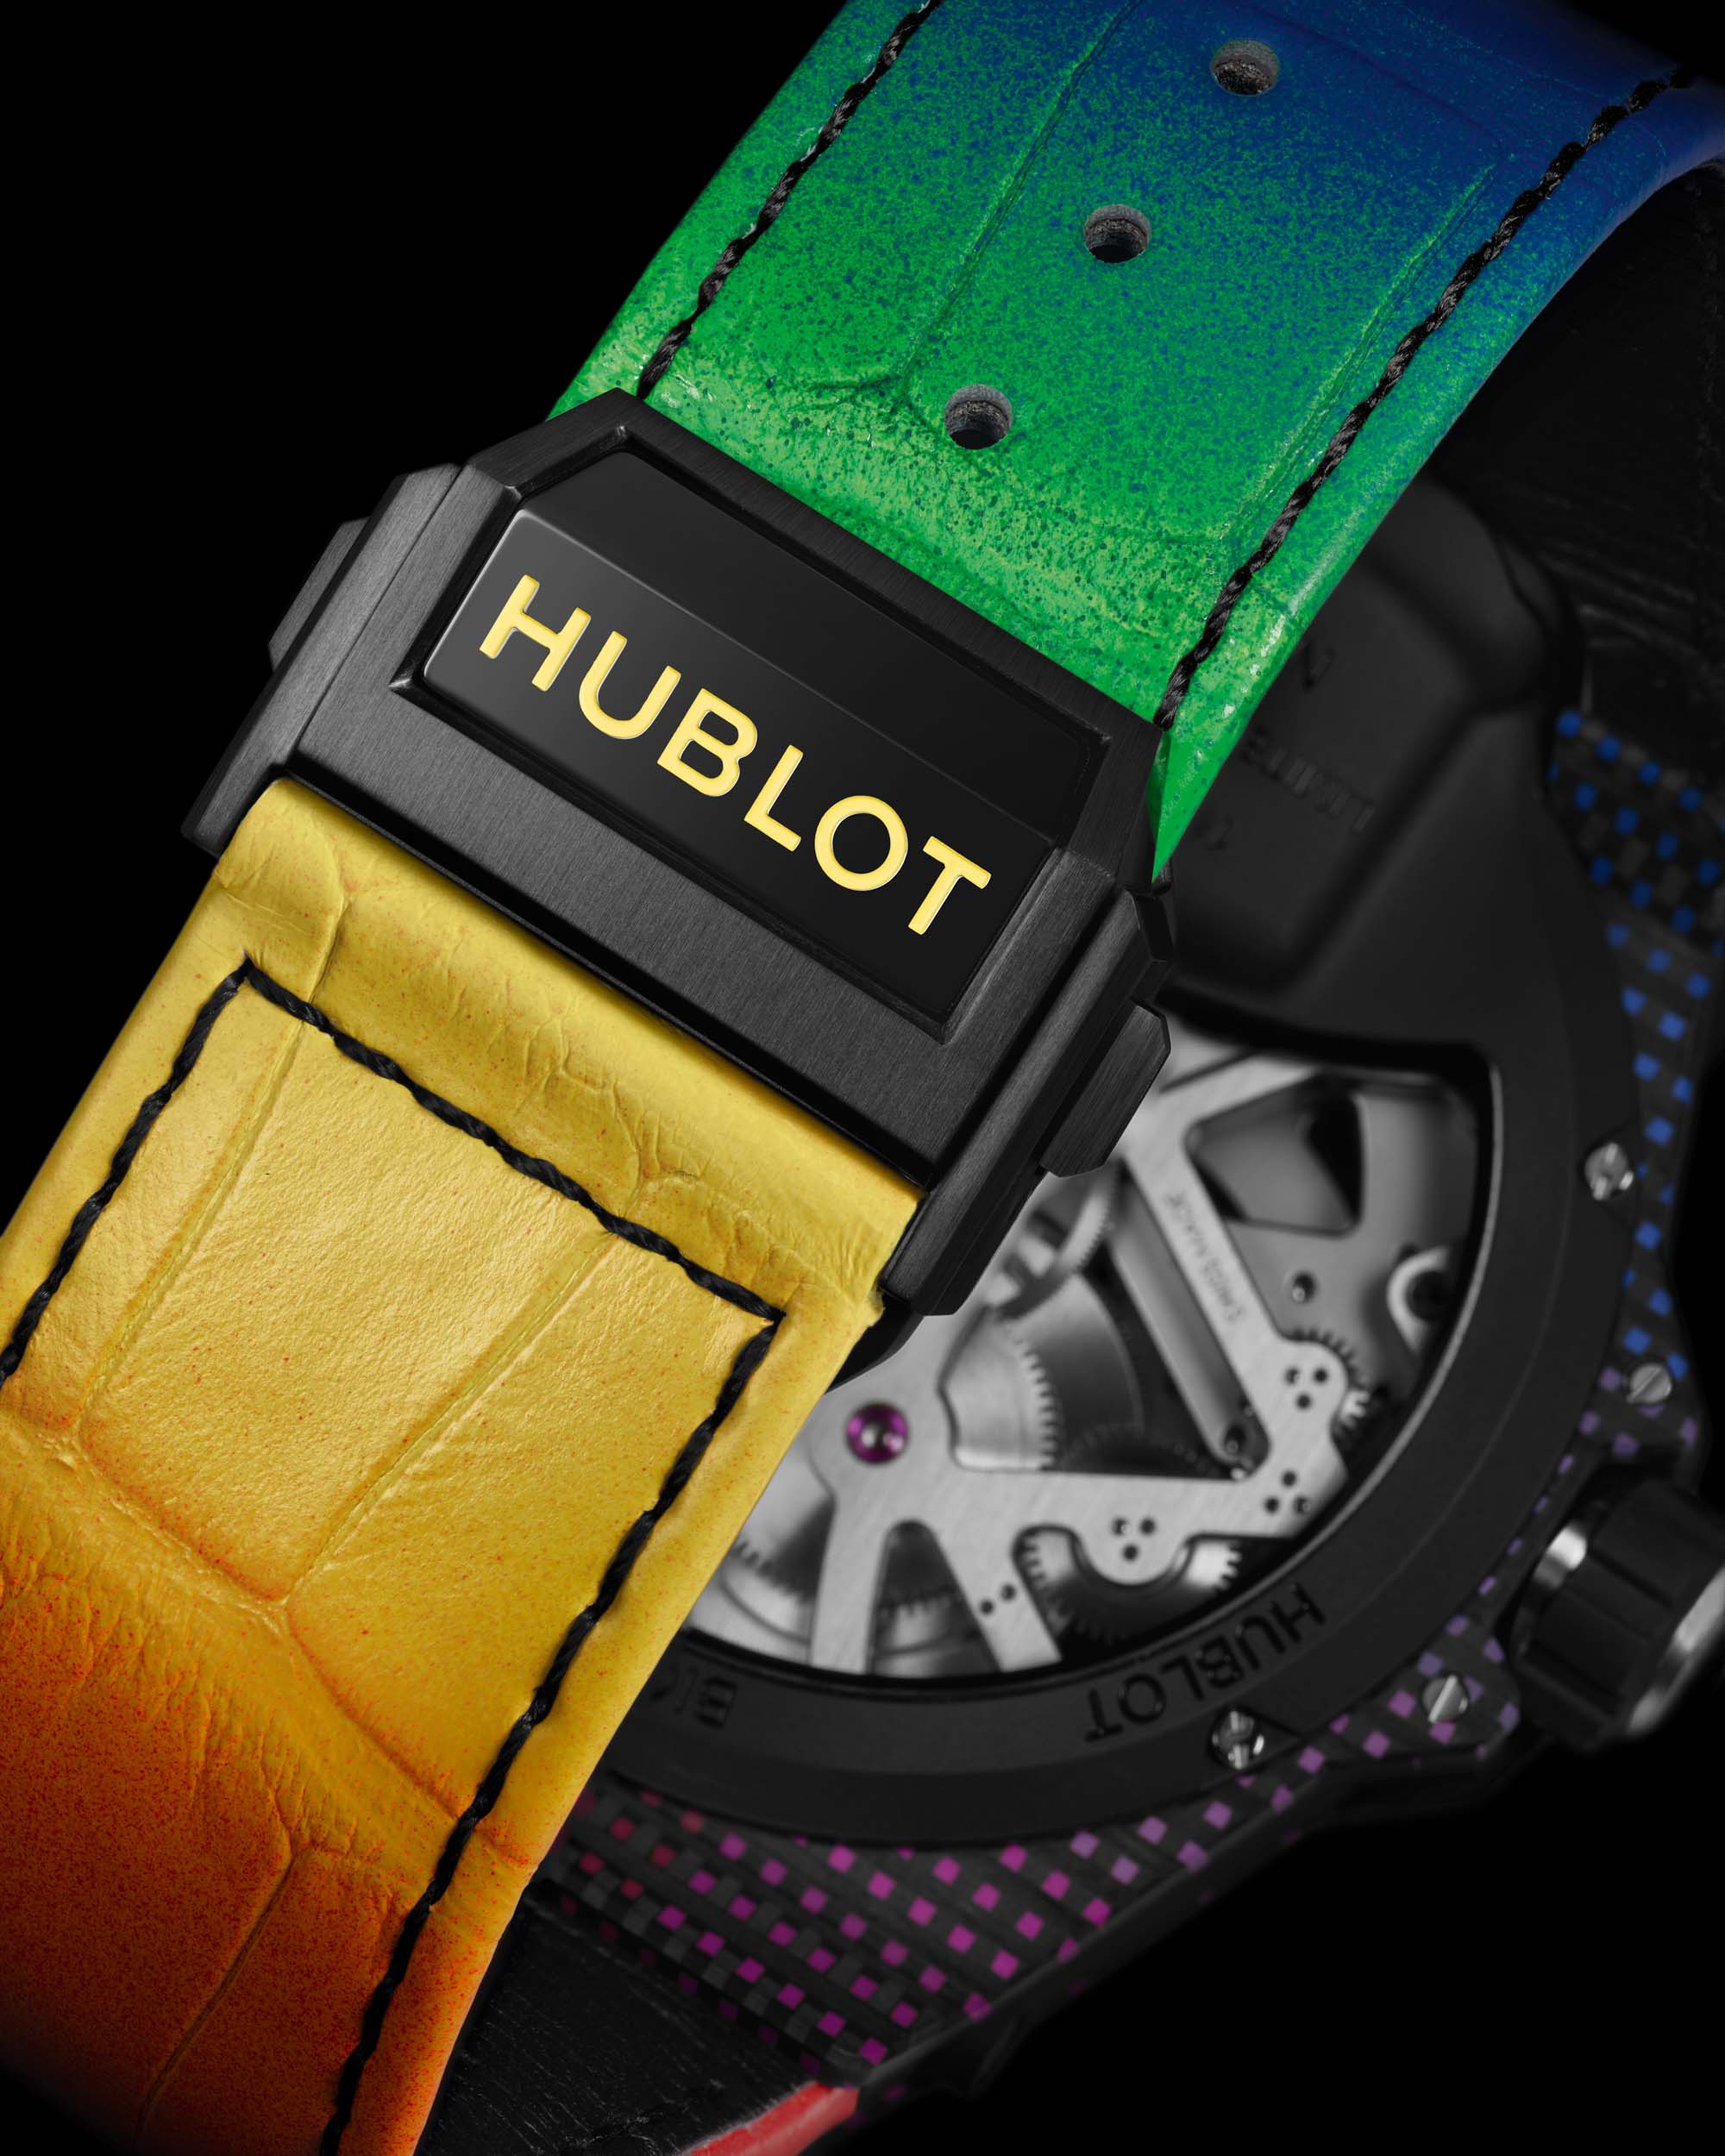 Hublot представляет часы MP-09 Tourbillon Bi-Axis Rainbow 3D Carbon